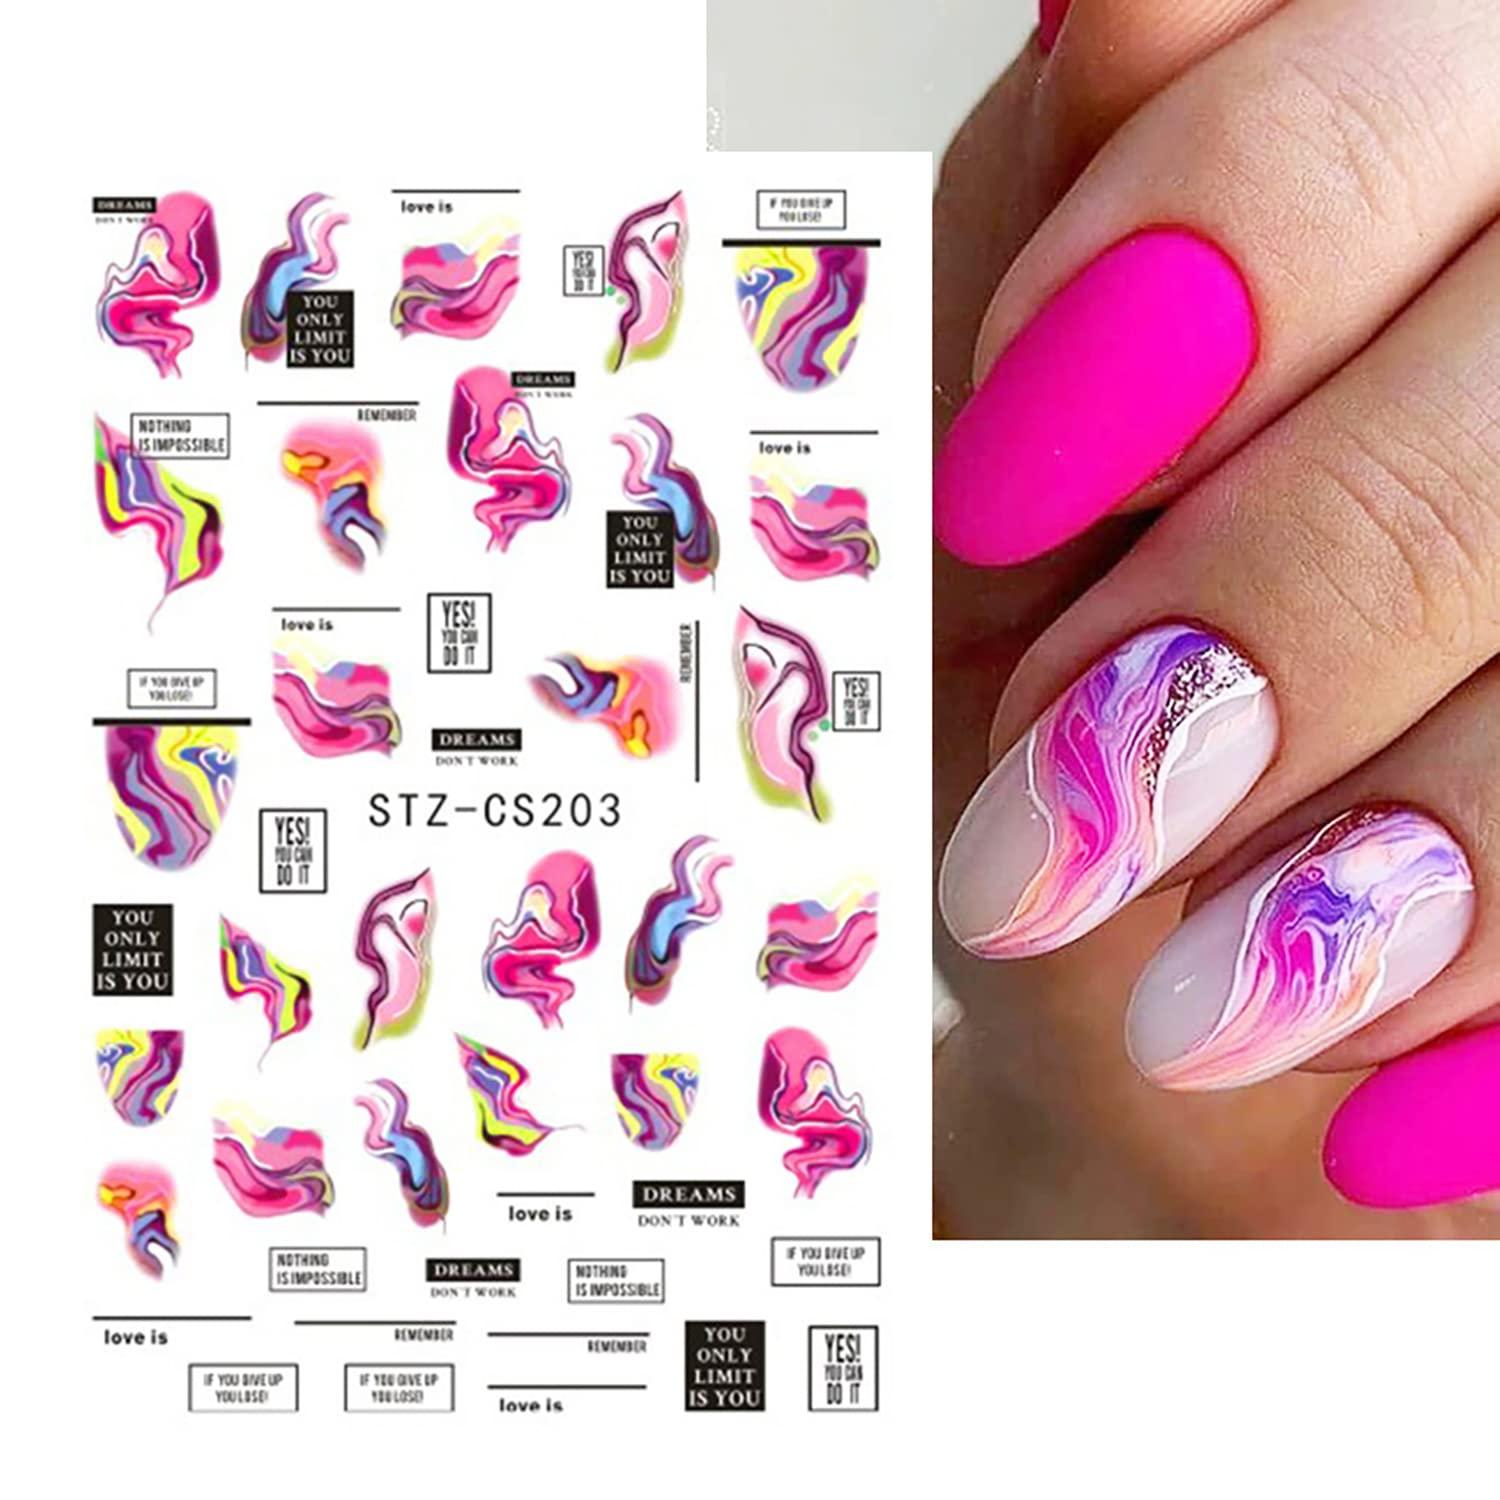 Stylish Nails, Nailpolish. Nail Art Design for the Fashion Style Stock  Image - Image of nails, fashion: 101684249